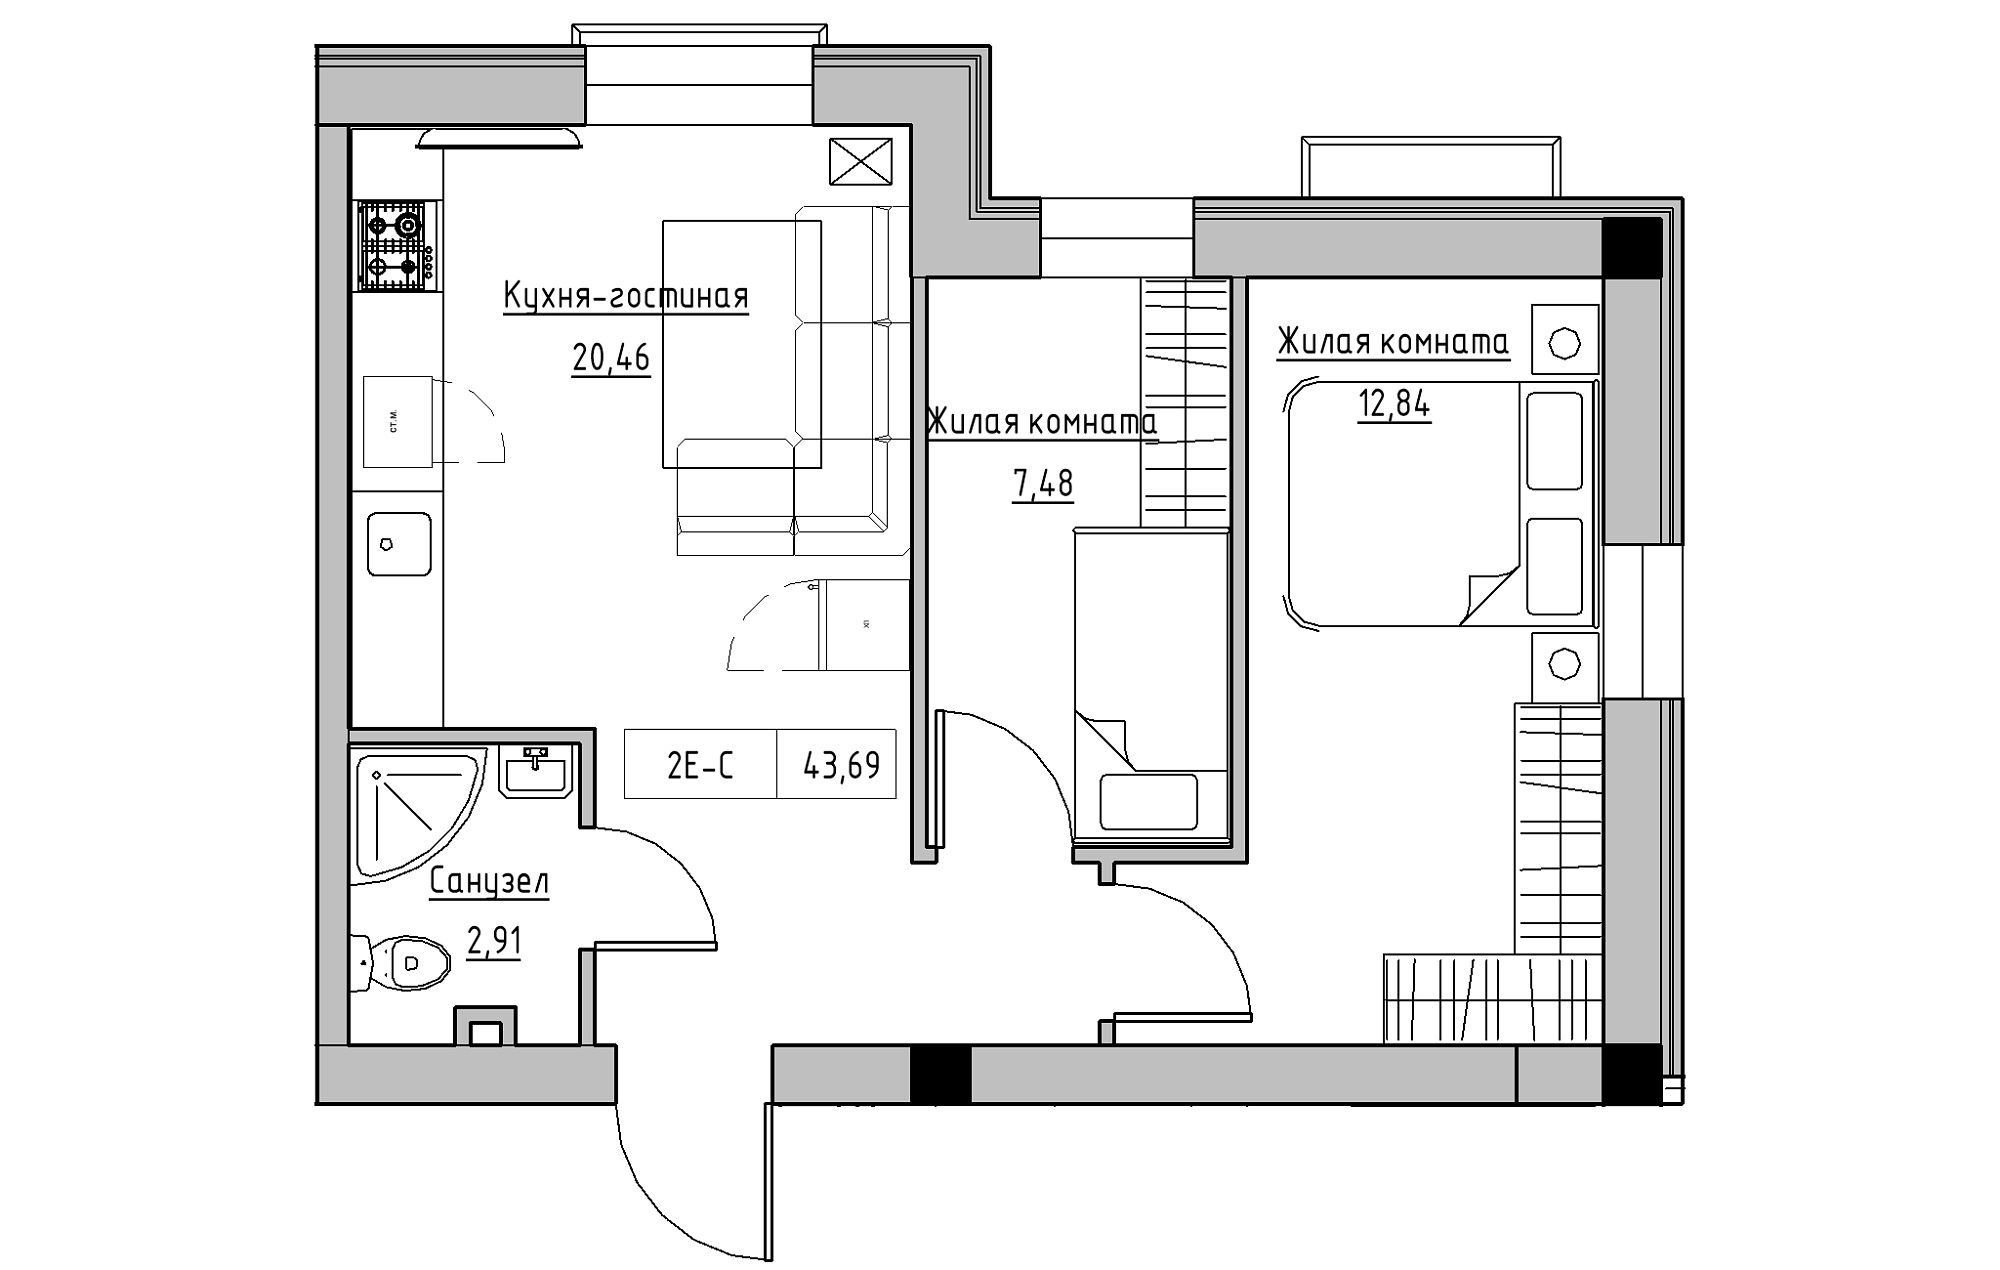 Planning 2-rm flats area 43.69m2, KS-018-01/0008.